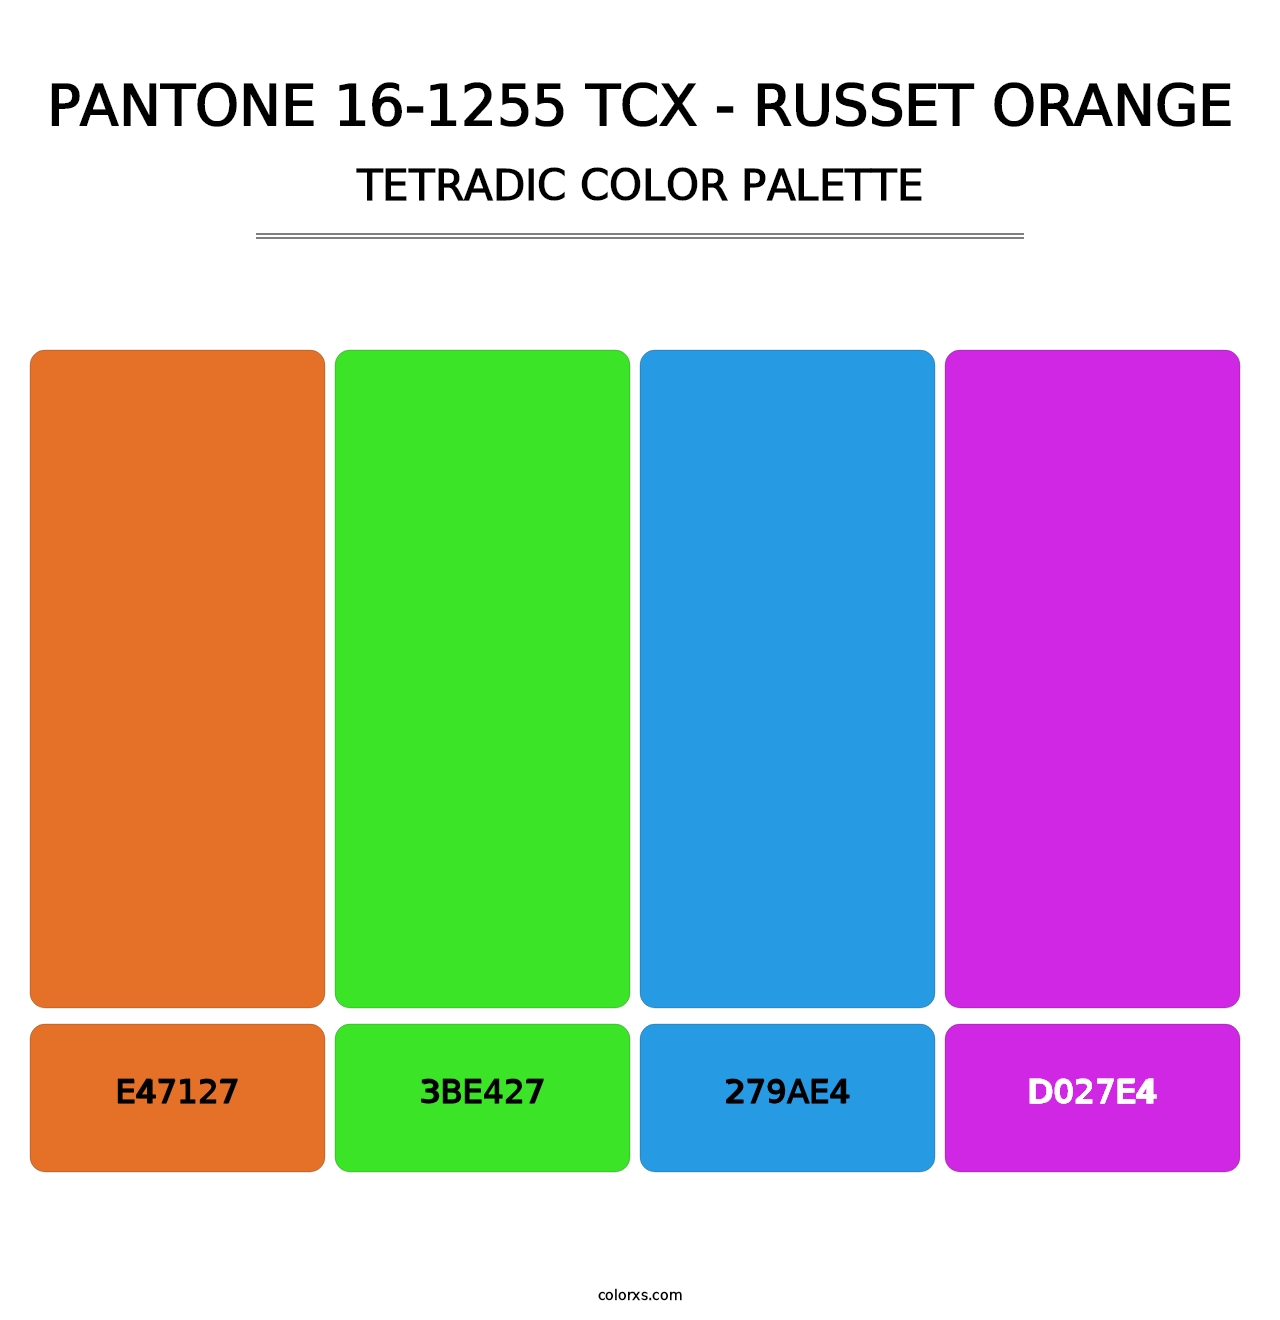 PANTONE 16-1255 TCX - Russet Orange - Tetradic Color Palette